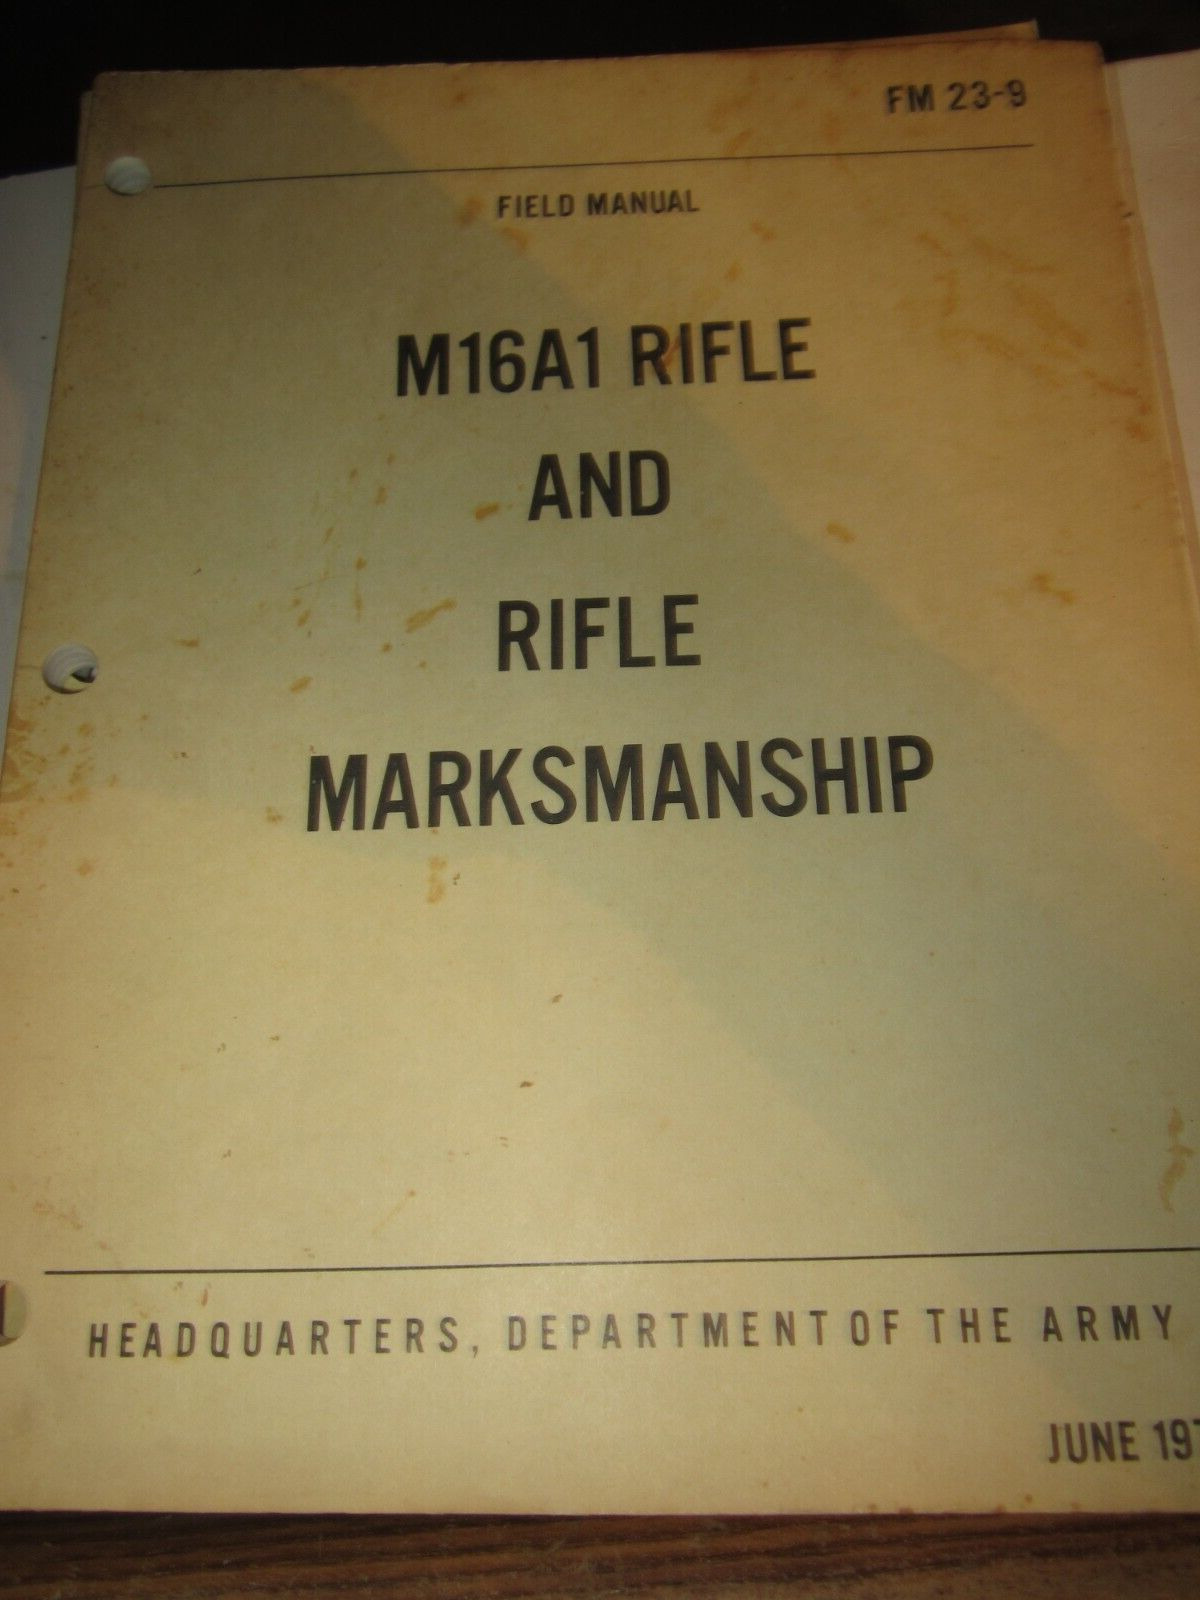 U.S Army 1974 Rifle M16A1 Rifle Marksmanship Field Manual FM 23-9 DOD Military